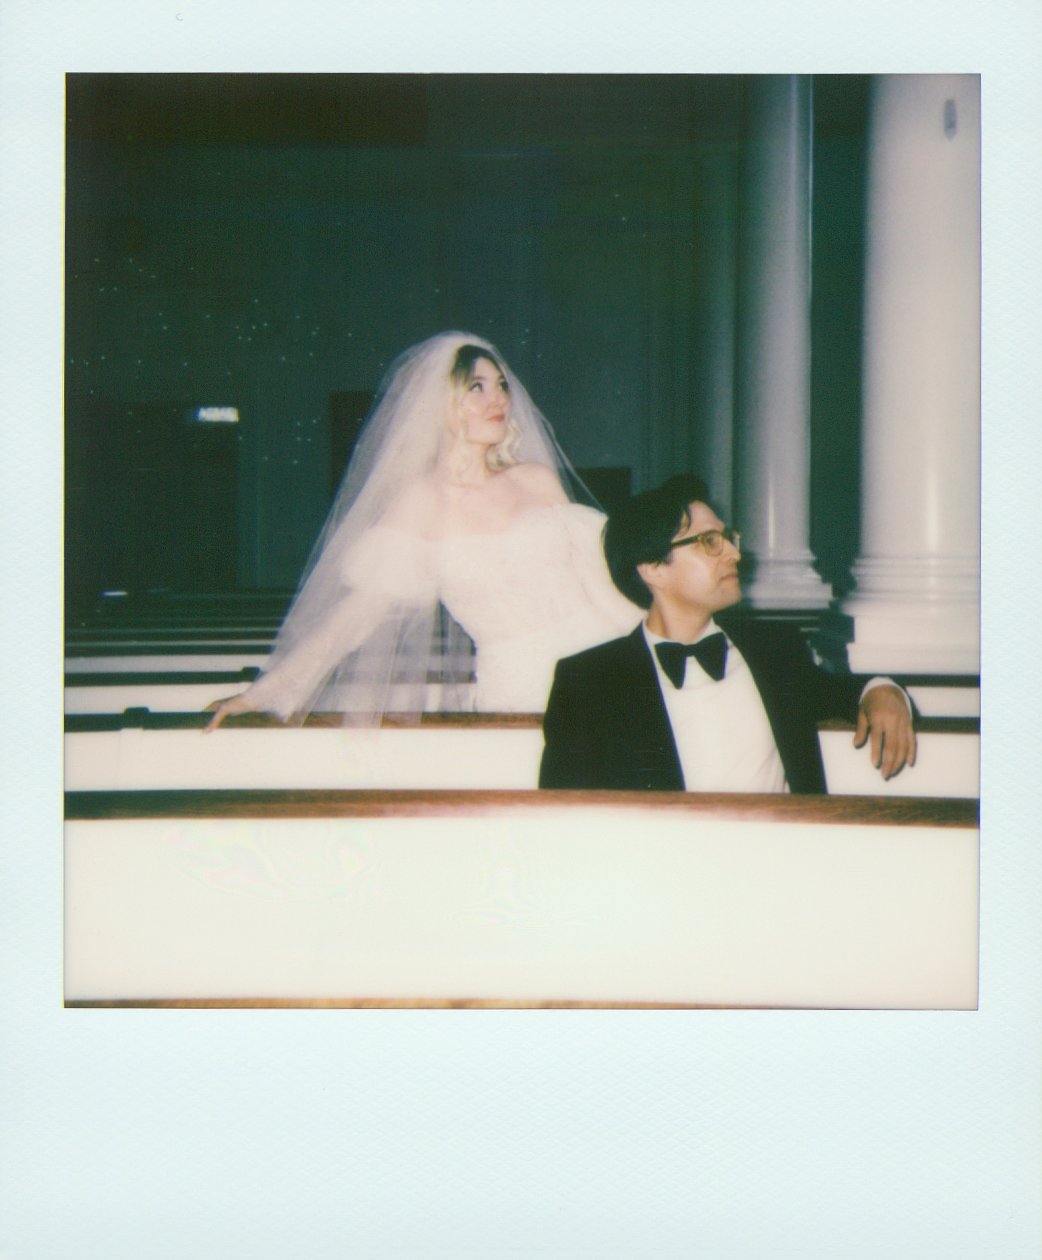 Wedding-taken-on-polaroids12.jpg